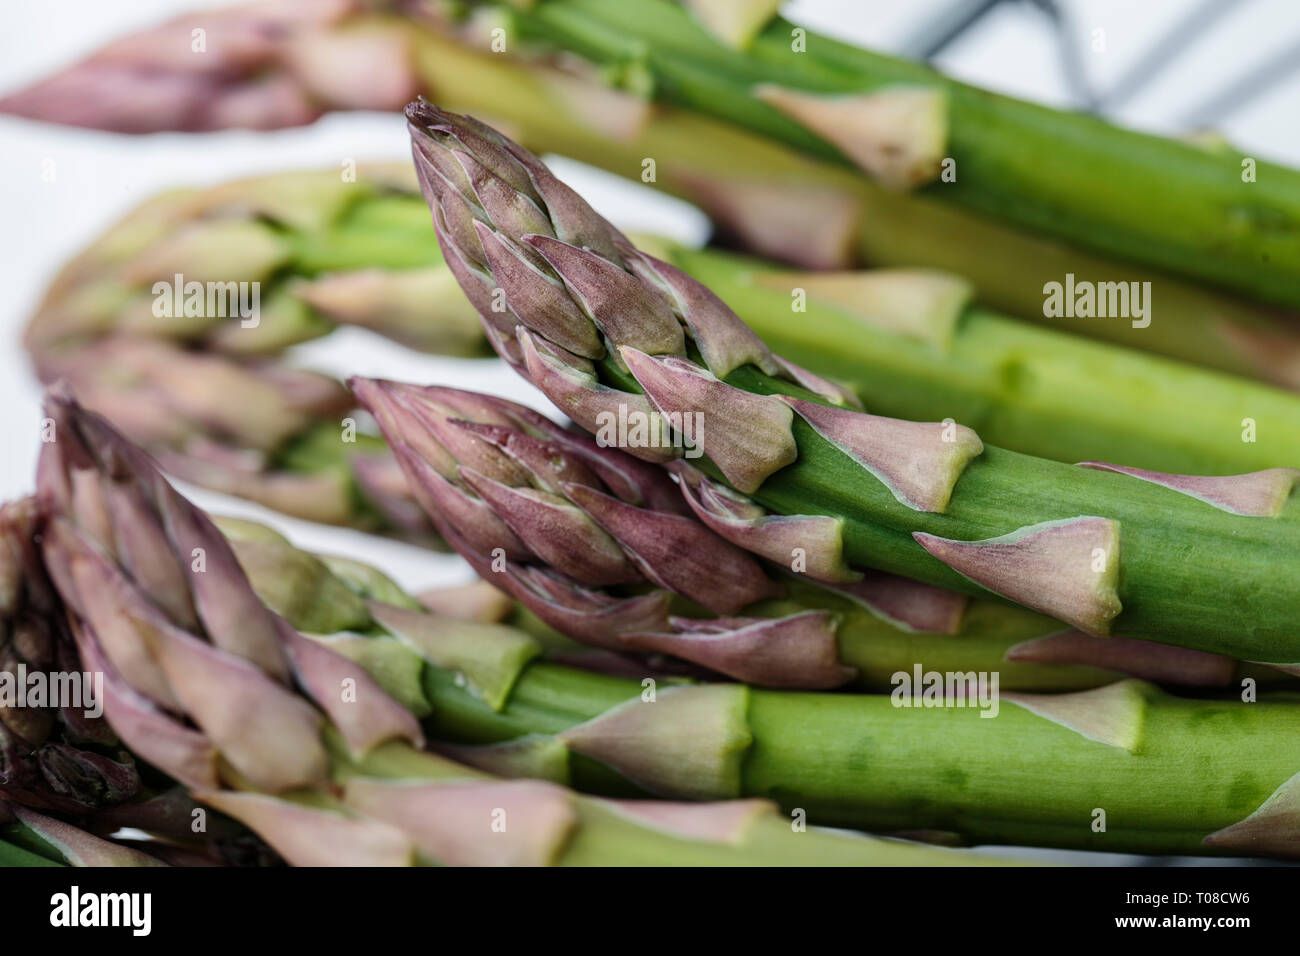 Studio Still Life with Fresh Green Asparagus Stock Photo